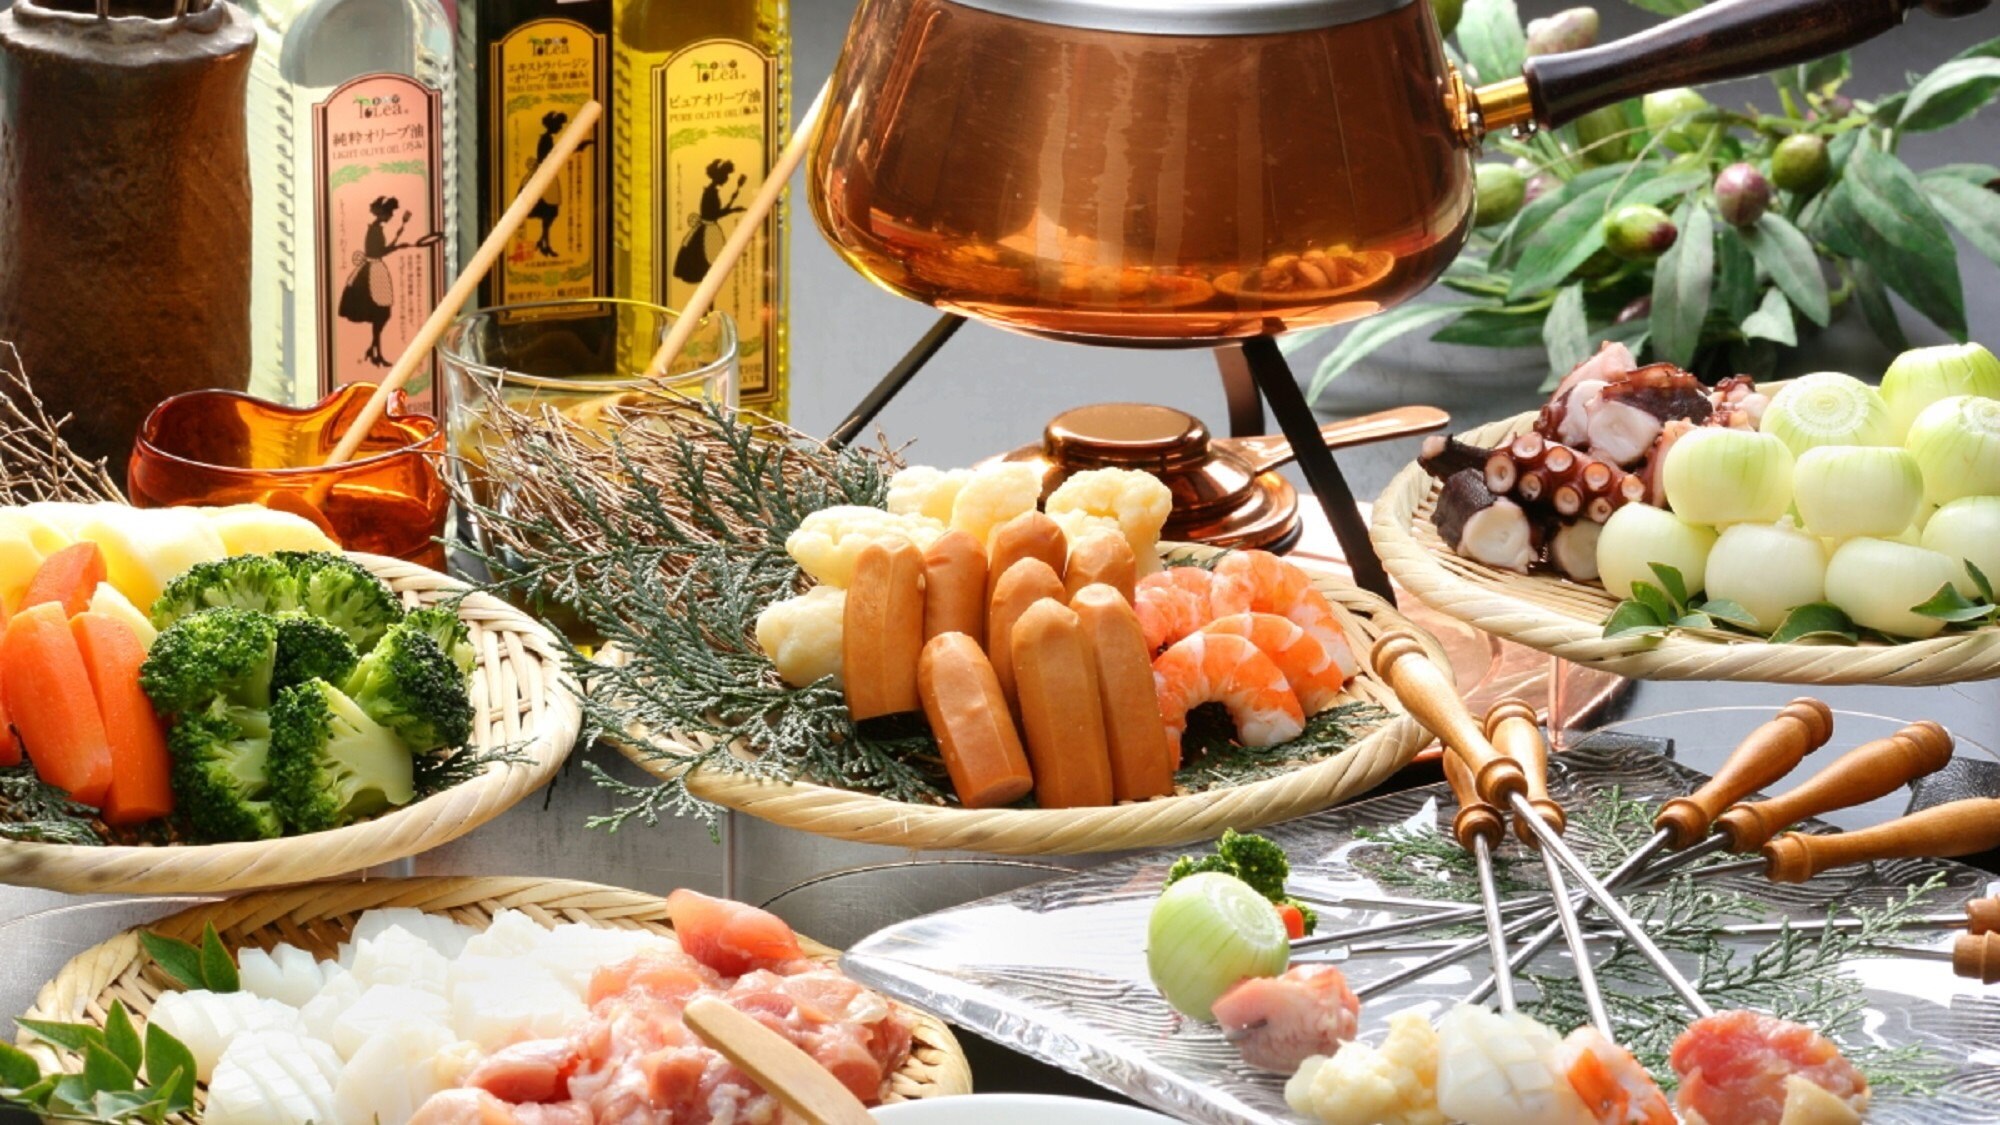 The definitive edition of Shodoshima gourmet! Olive oil fondue